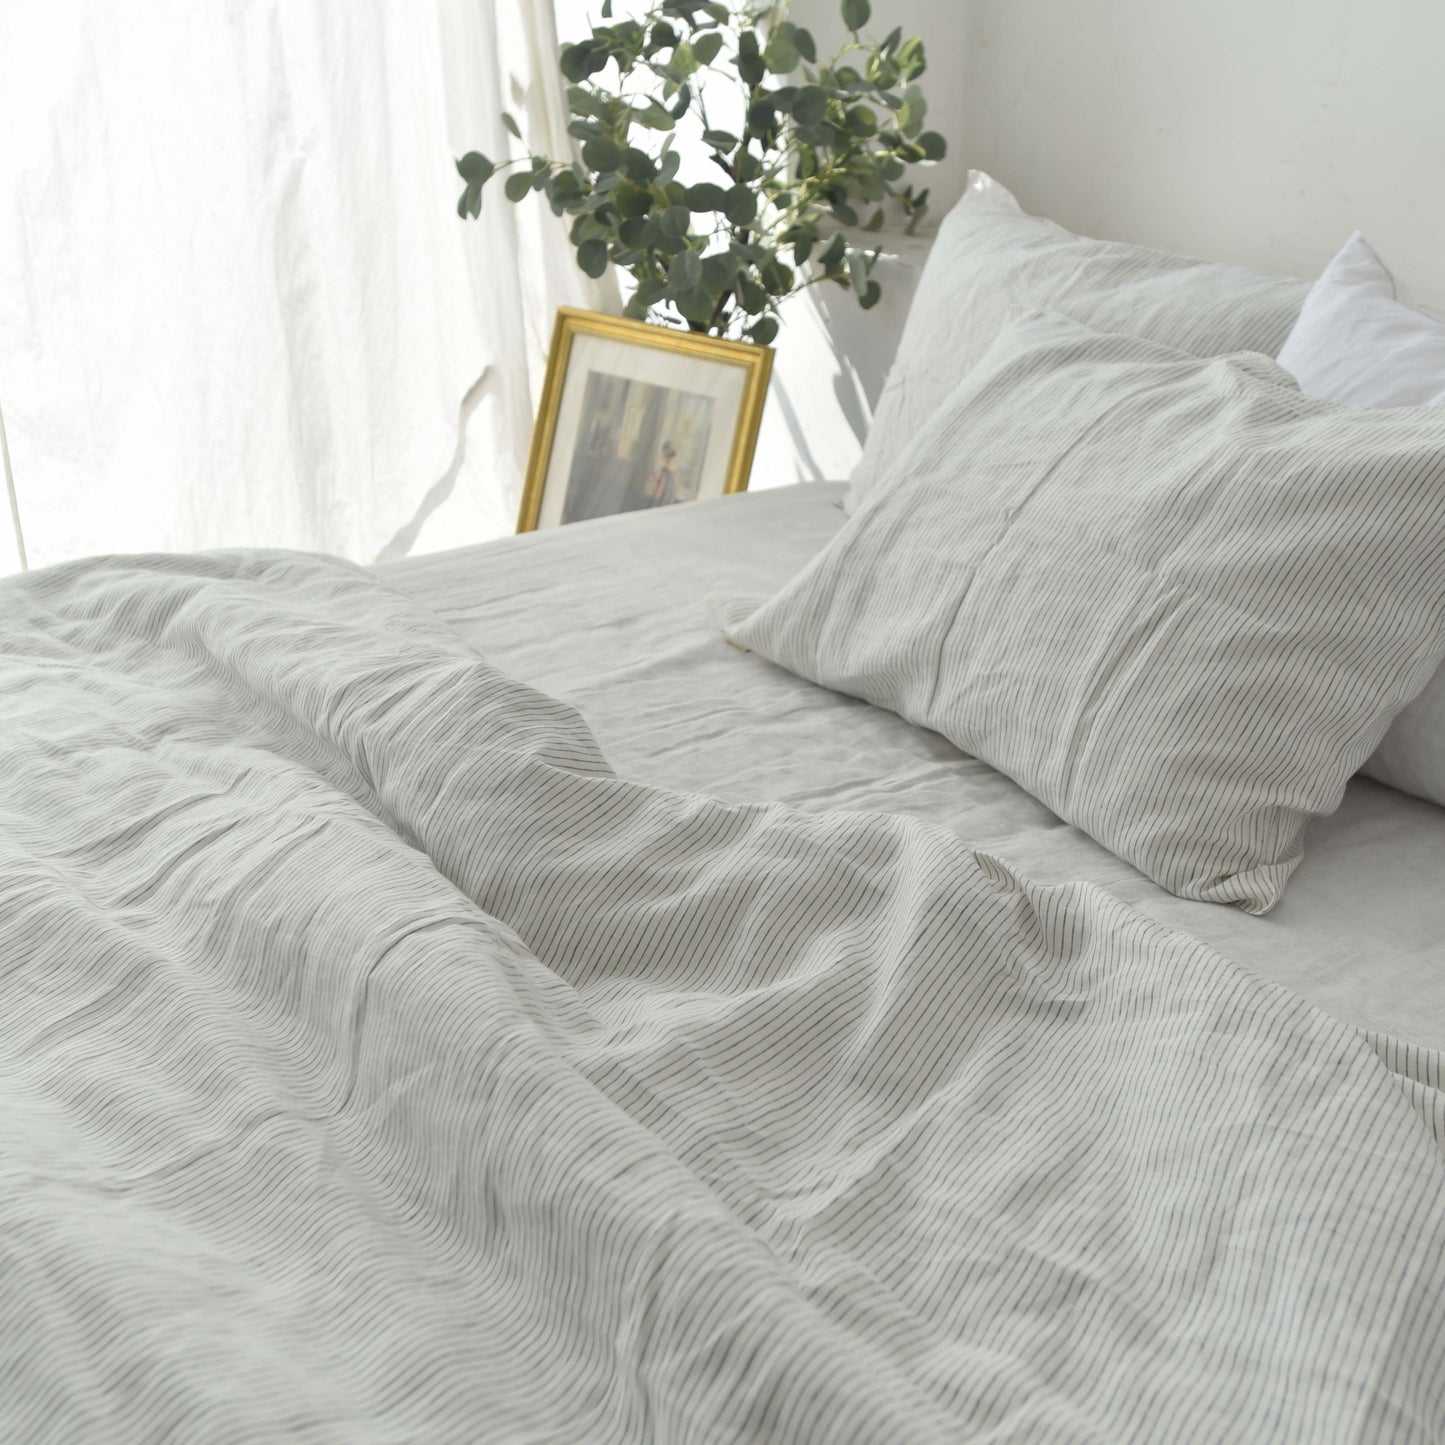 Black Striped French Linen Pillowcase - Yarn Dyeing 59